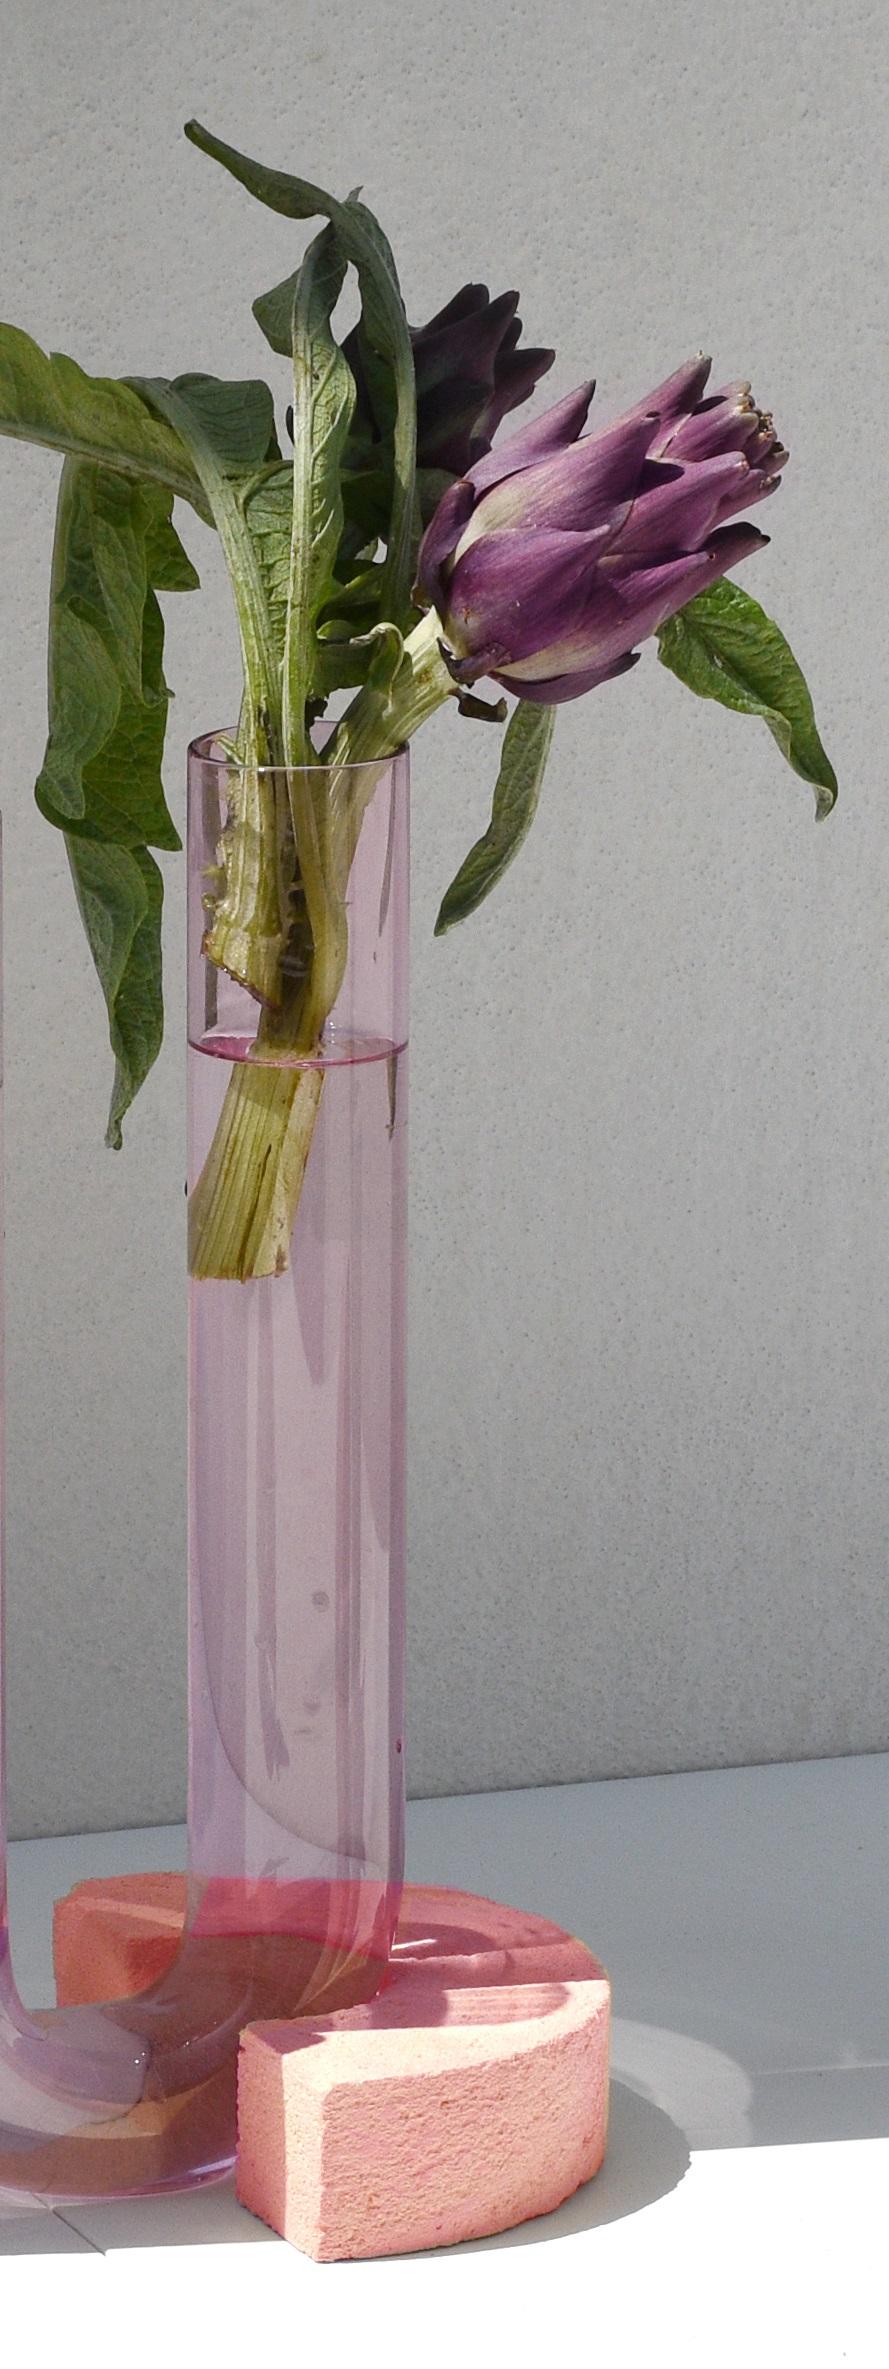 Hand-Crafted Pink-Pink Cochlea Della Consapevolezza Soils Edition Vase by Coki Barbieri For Sale